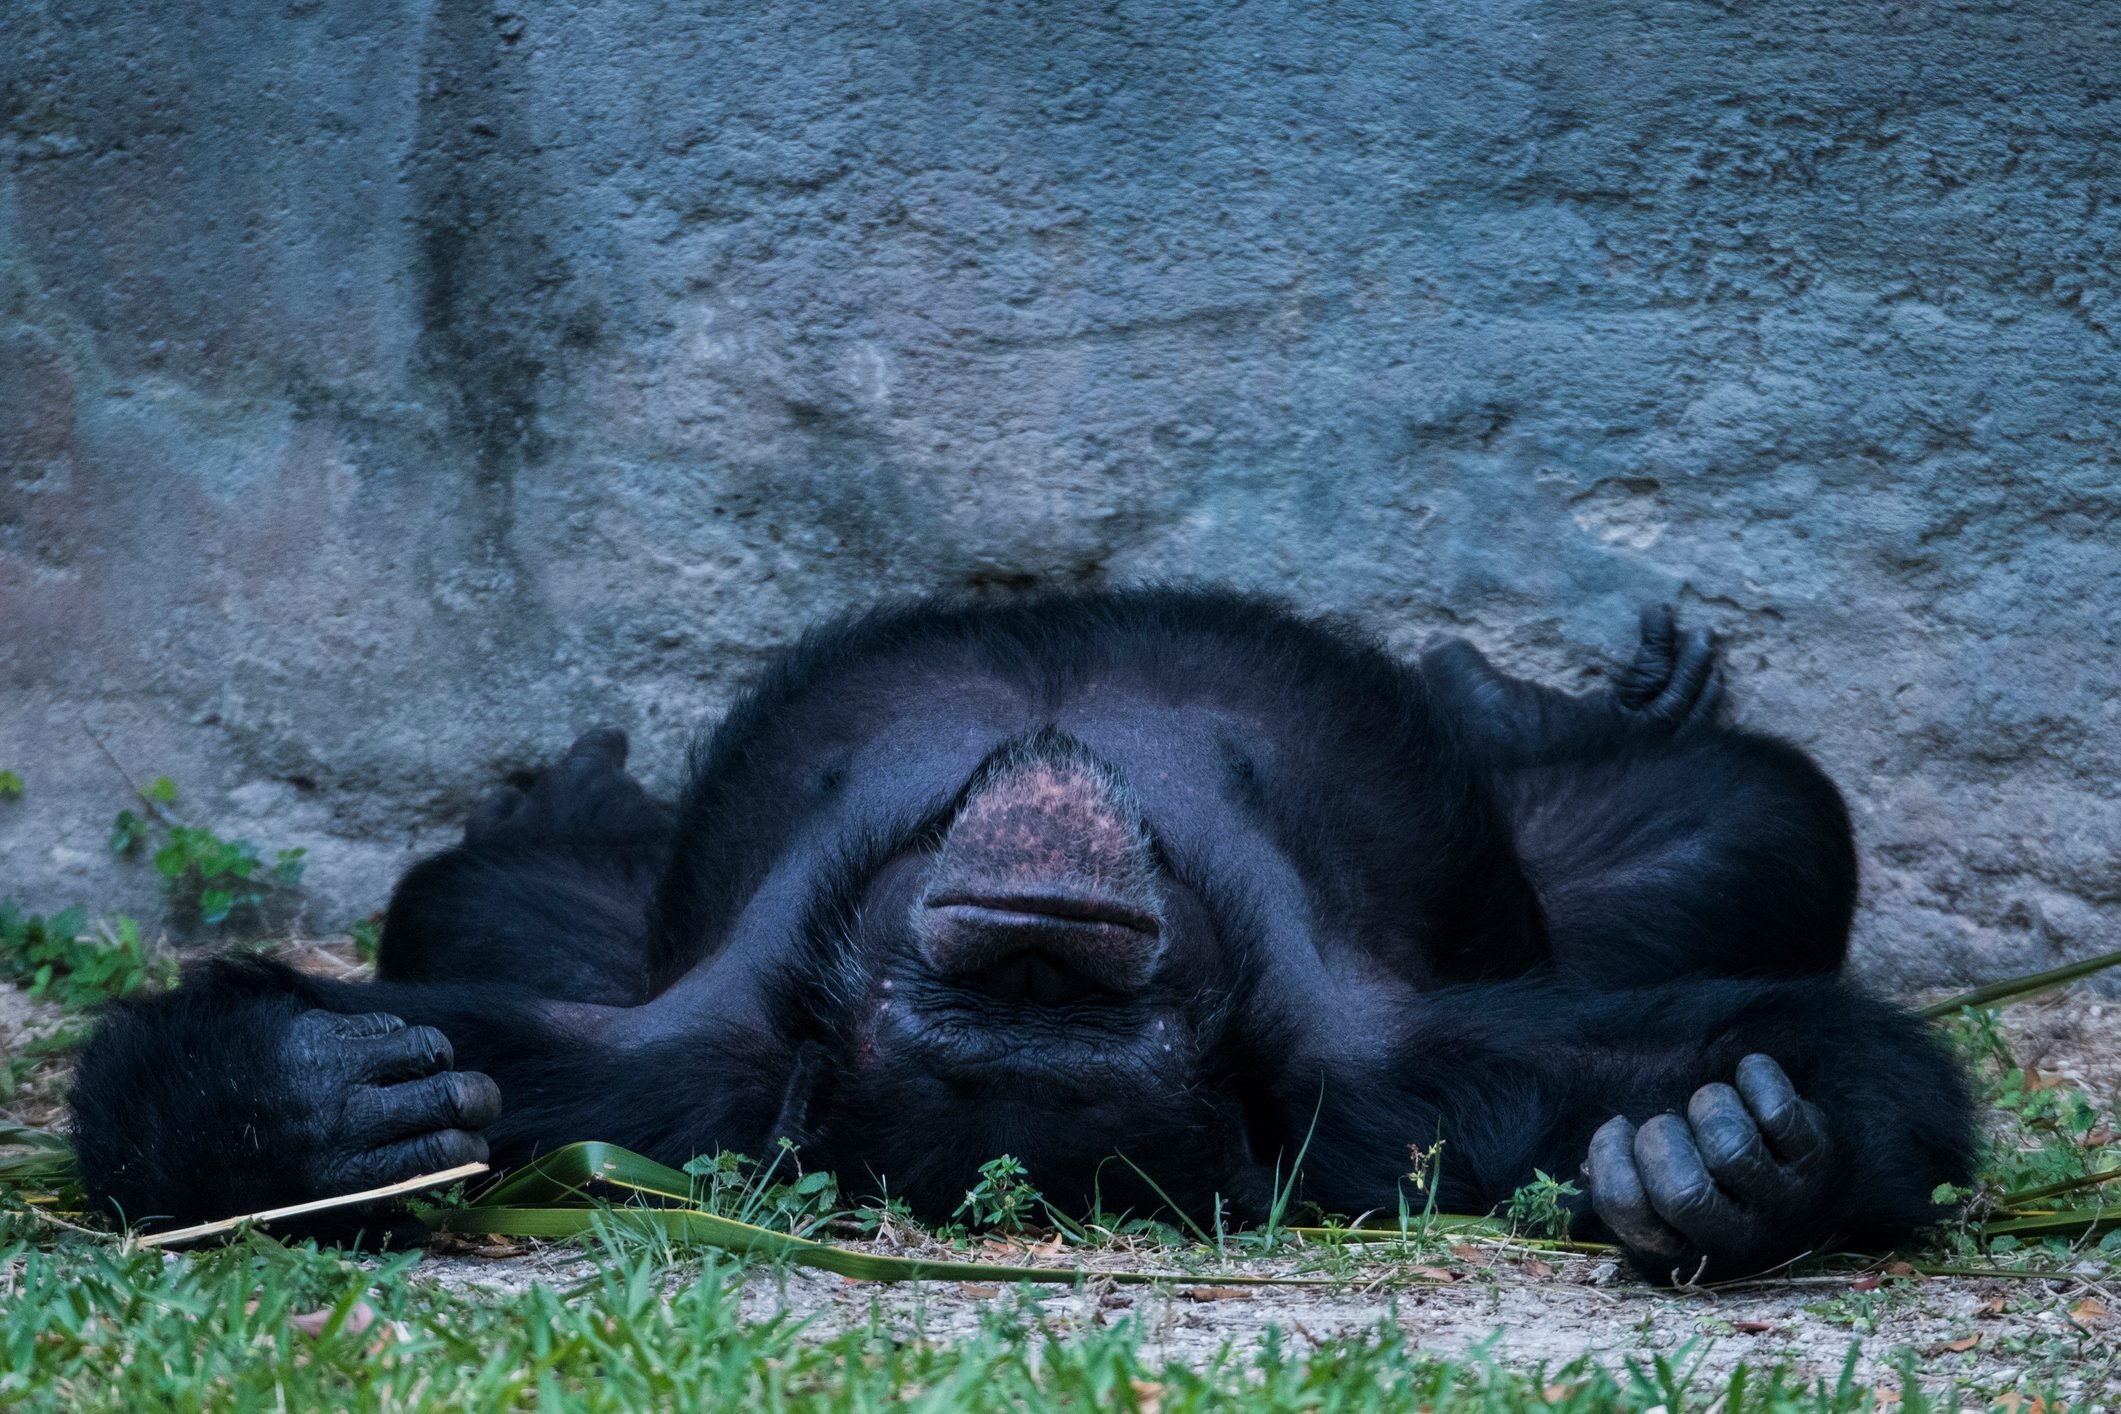 Chimpanzee sleeping on ground